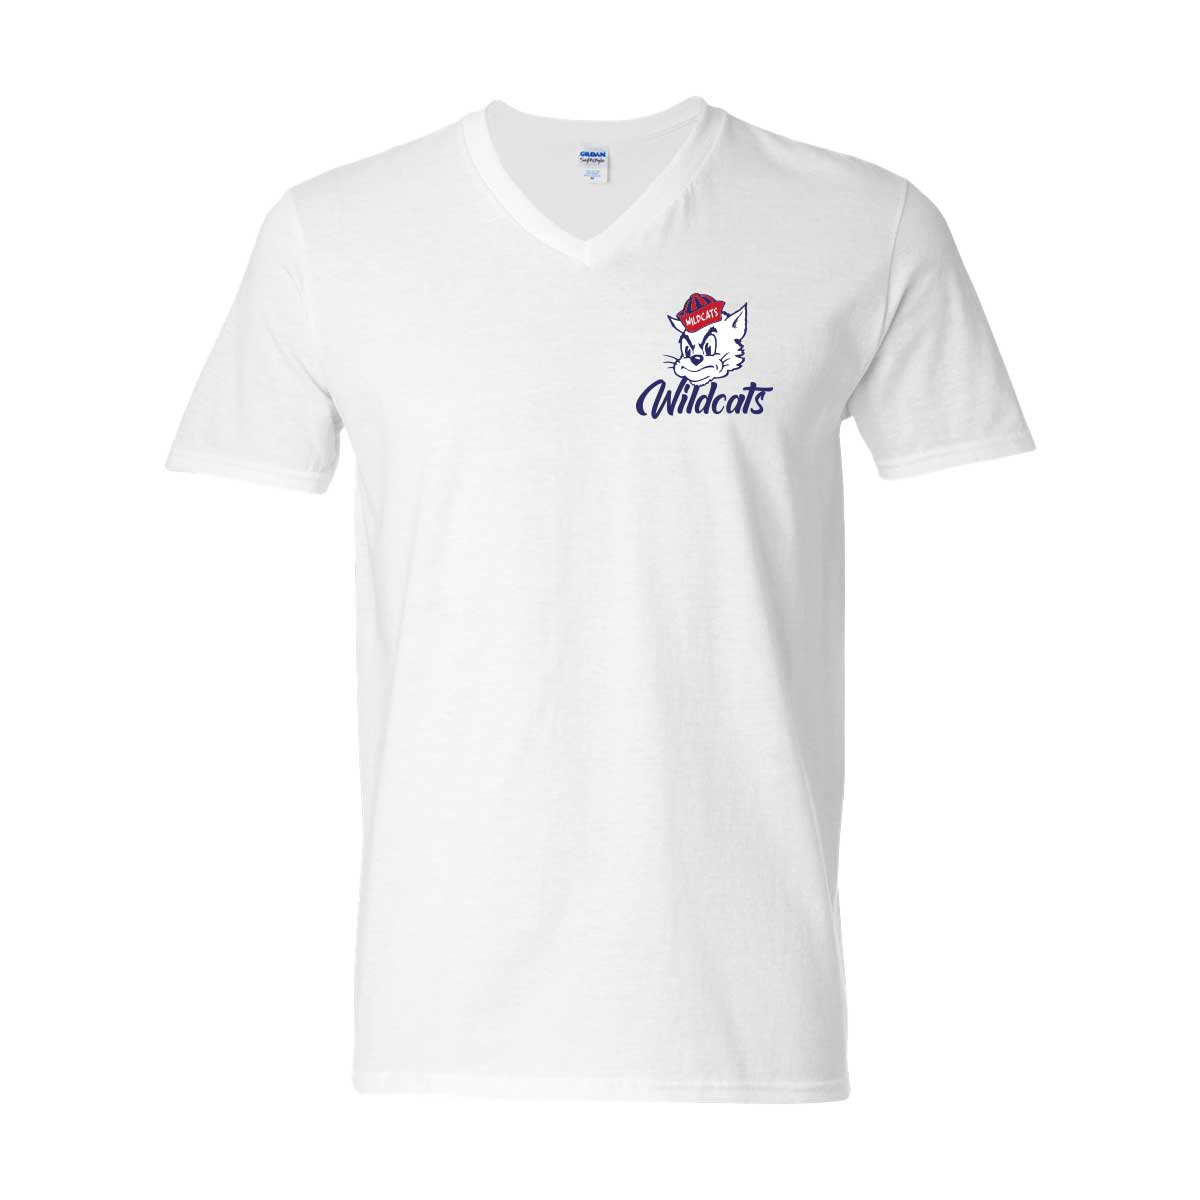 Deming Wildcats Cotton V-Neck T-Shirt